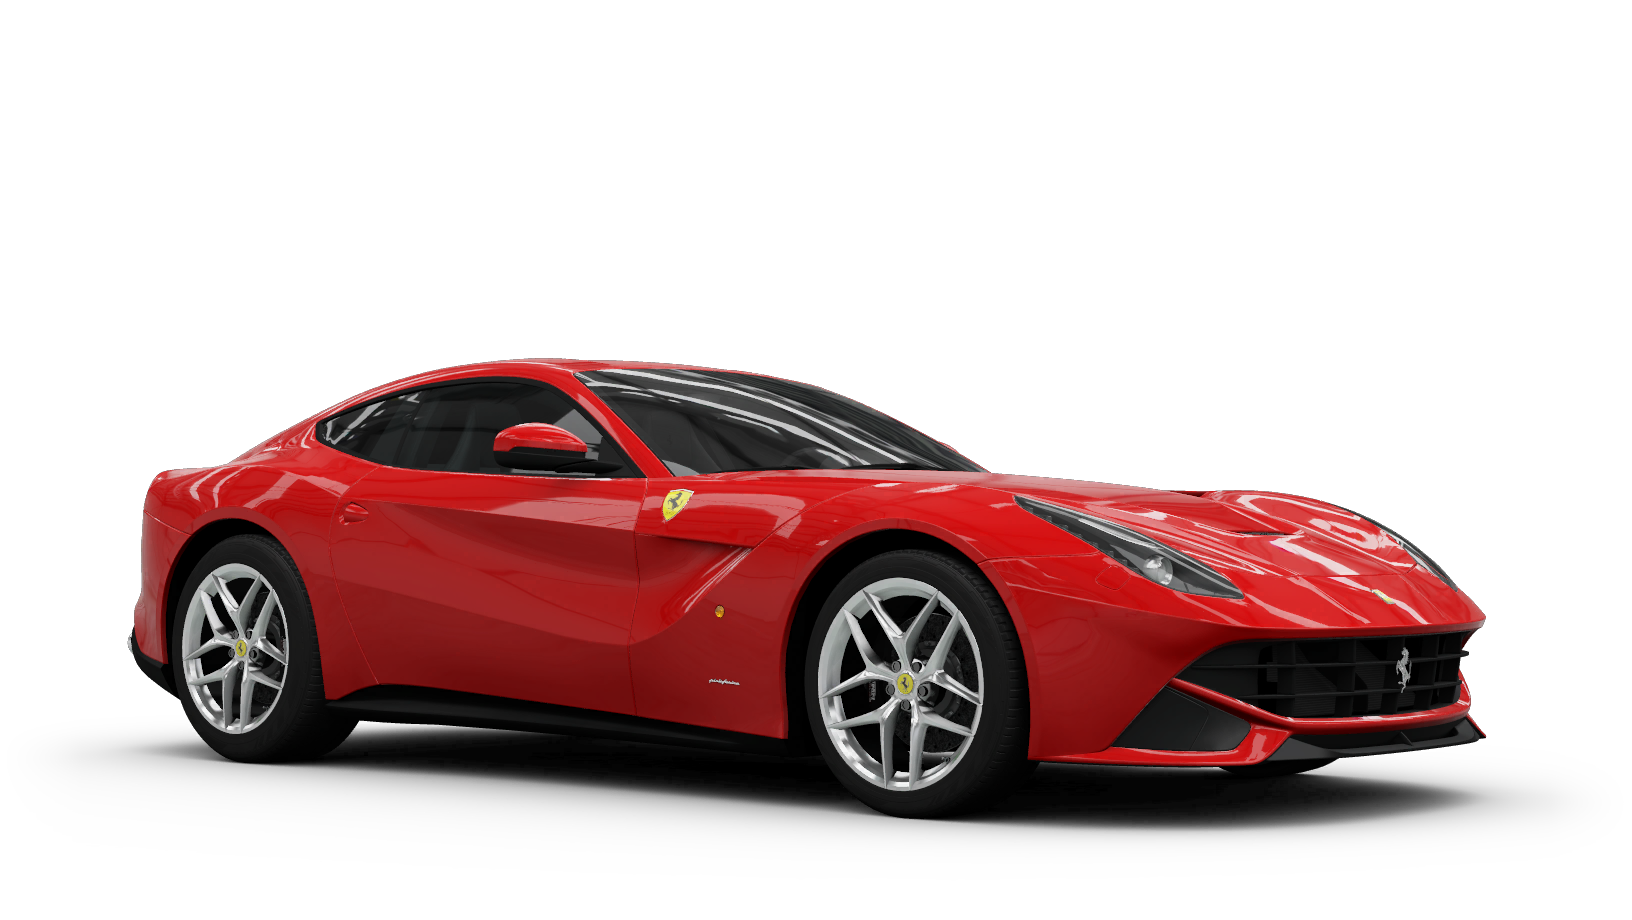 Ferrari F12berlinetta | Forza Wiki | Fandom